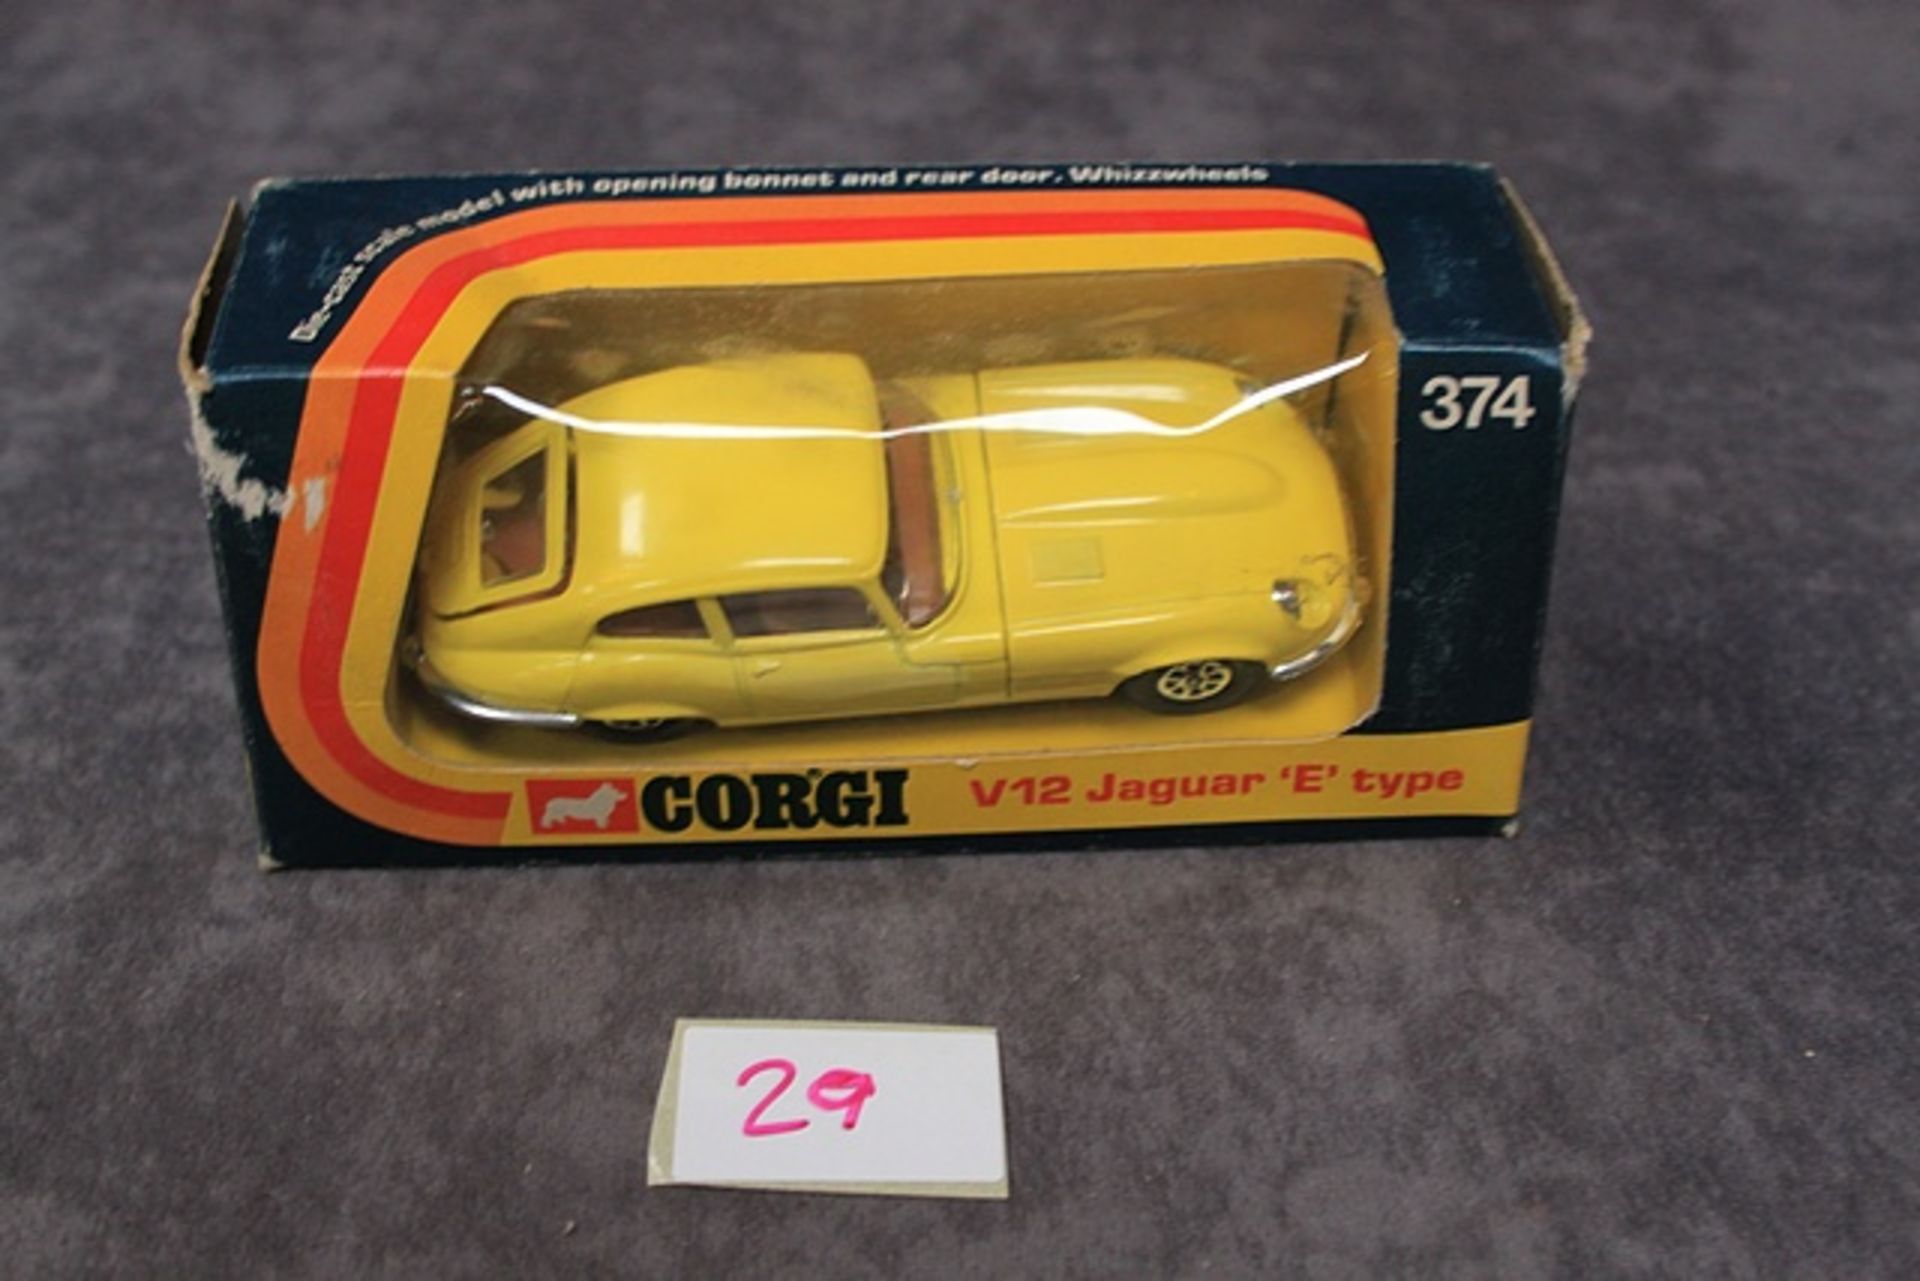 Corgi Whizz Number 374 5.3 Litre V12 Jaguar 'E' Type With Excellent Box - Image 2 of 3